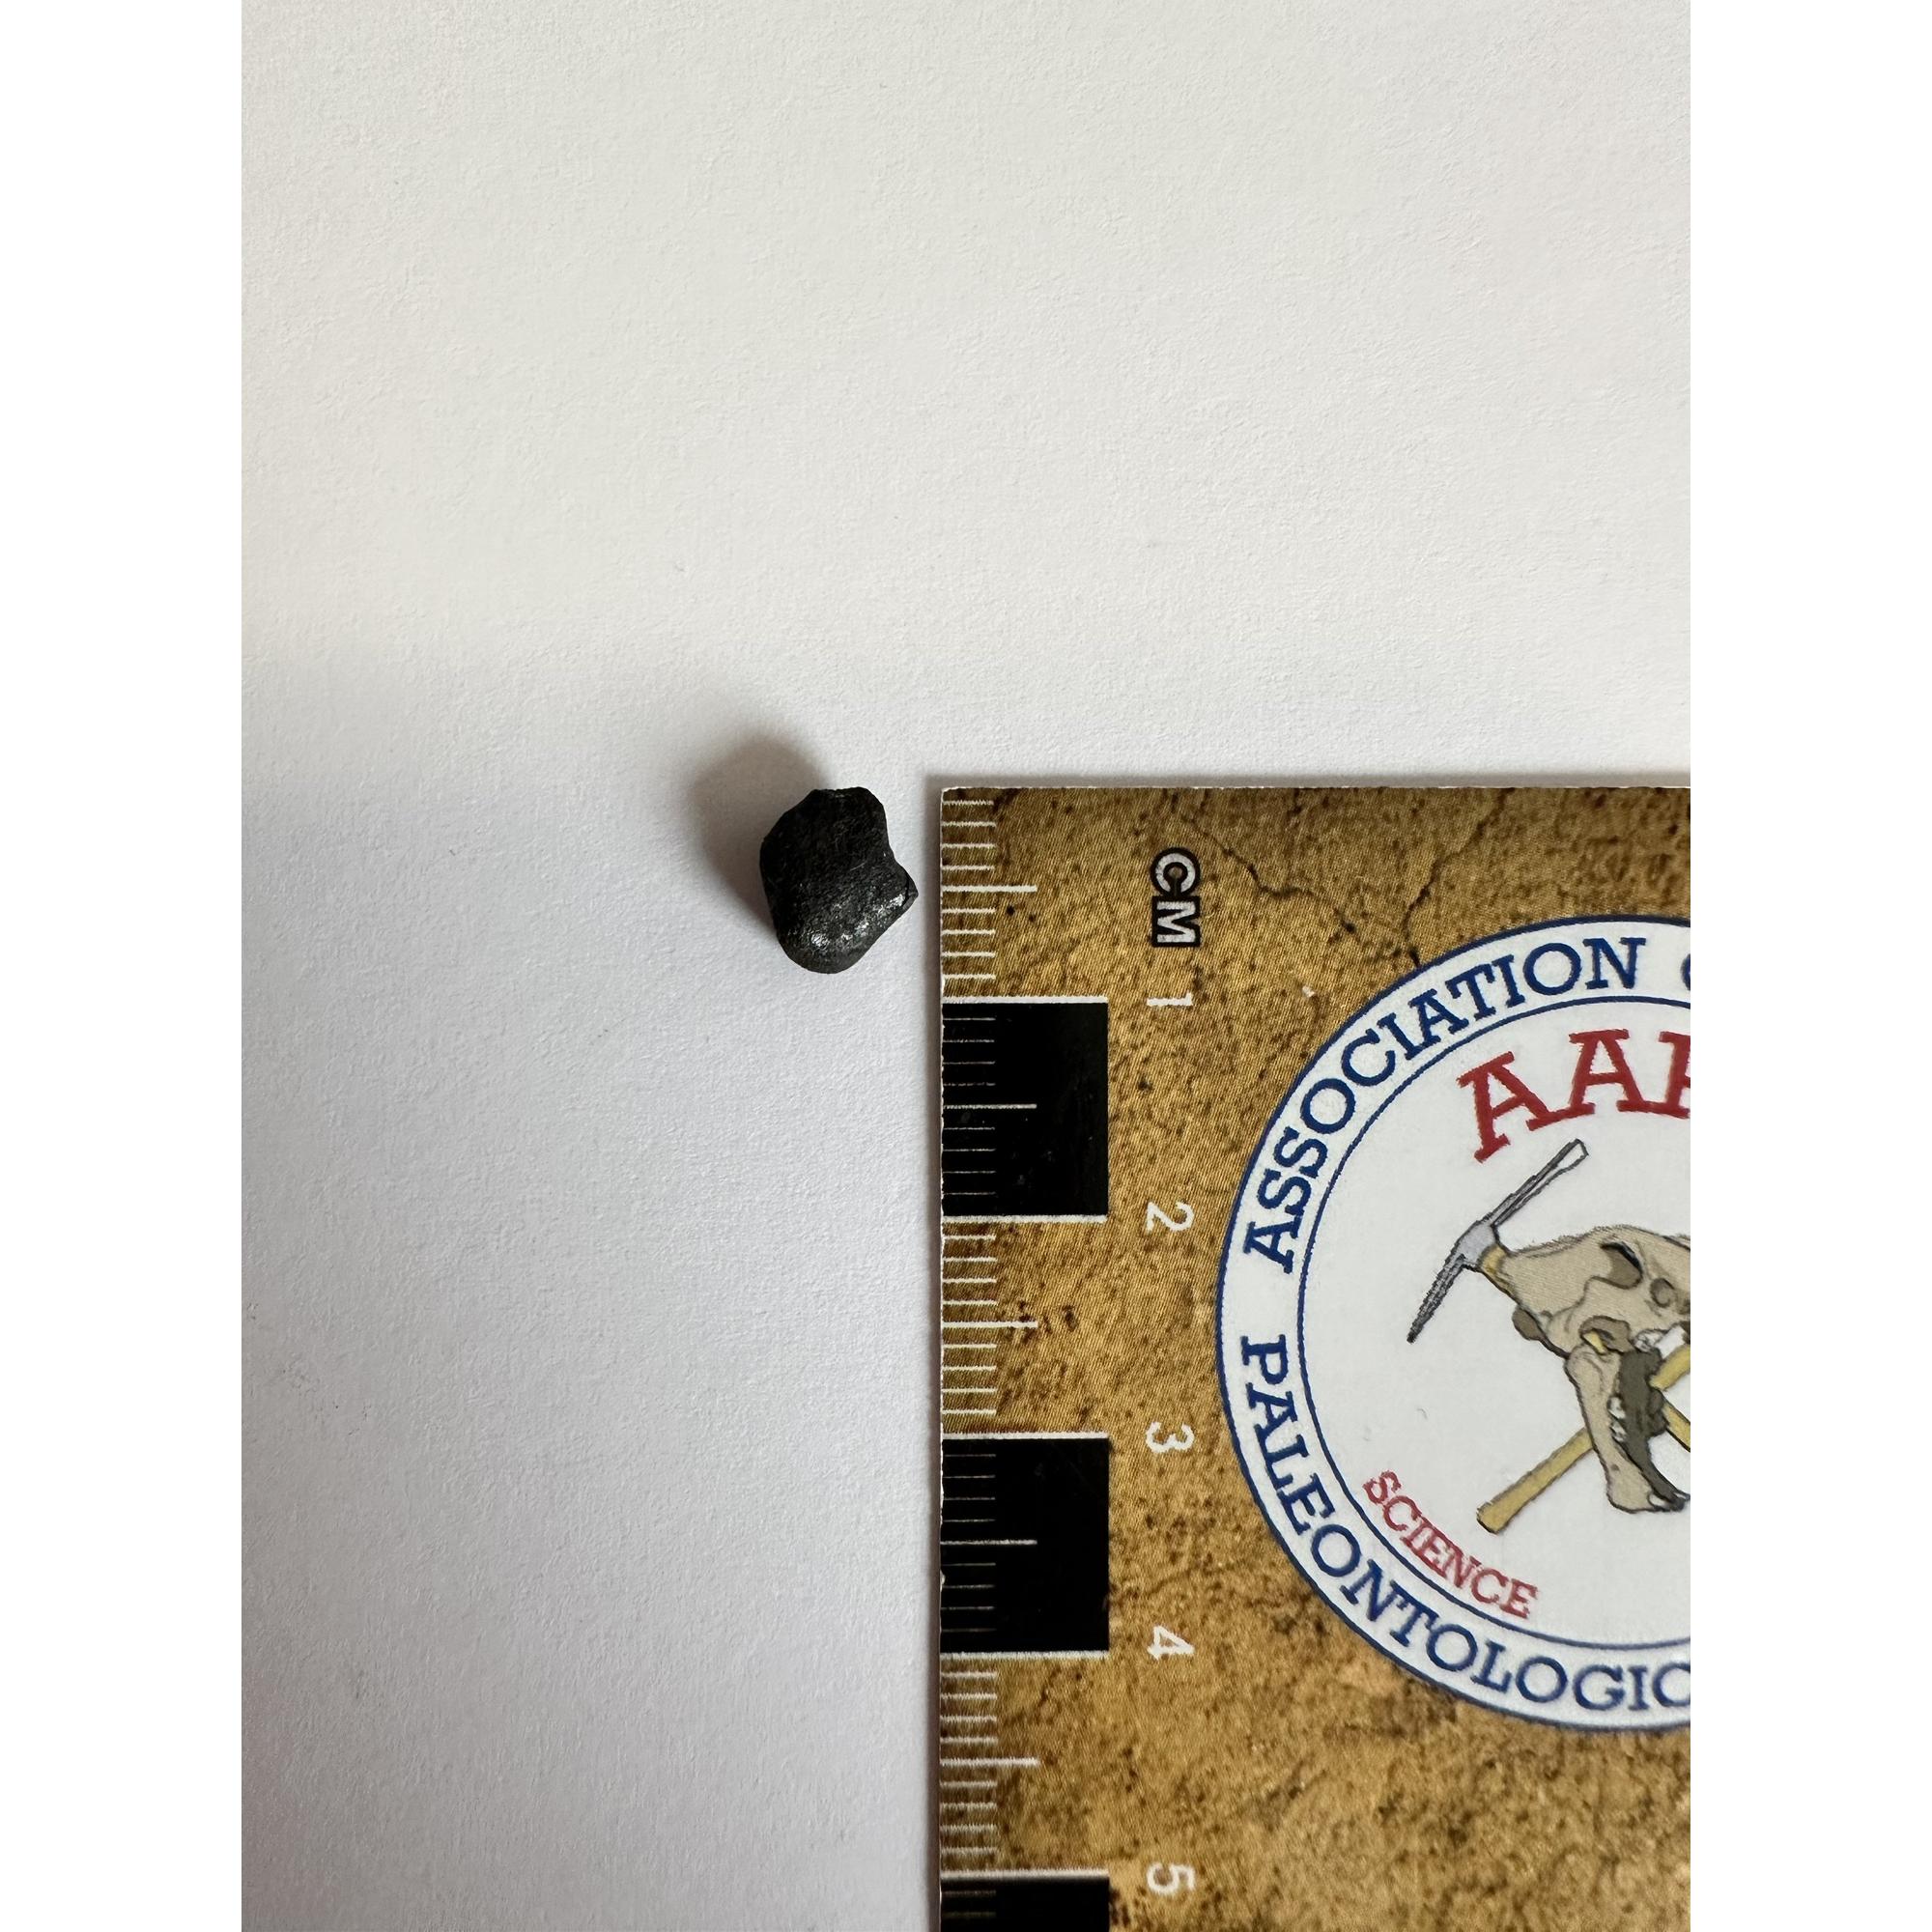 Chelyabinsk Meteorite, 0.32 grams Prehistoric Online